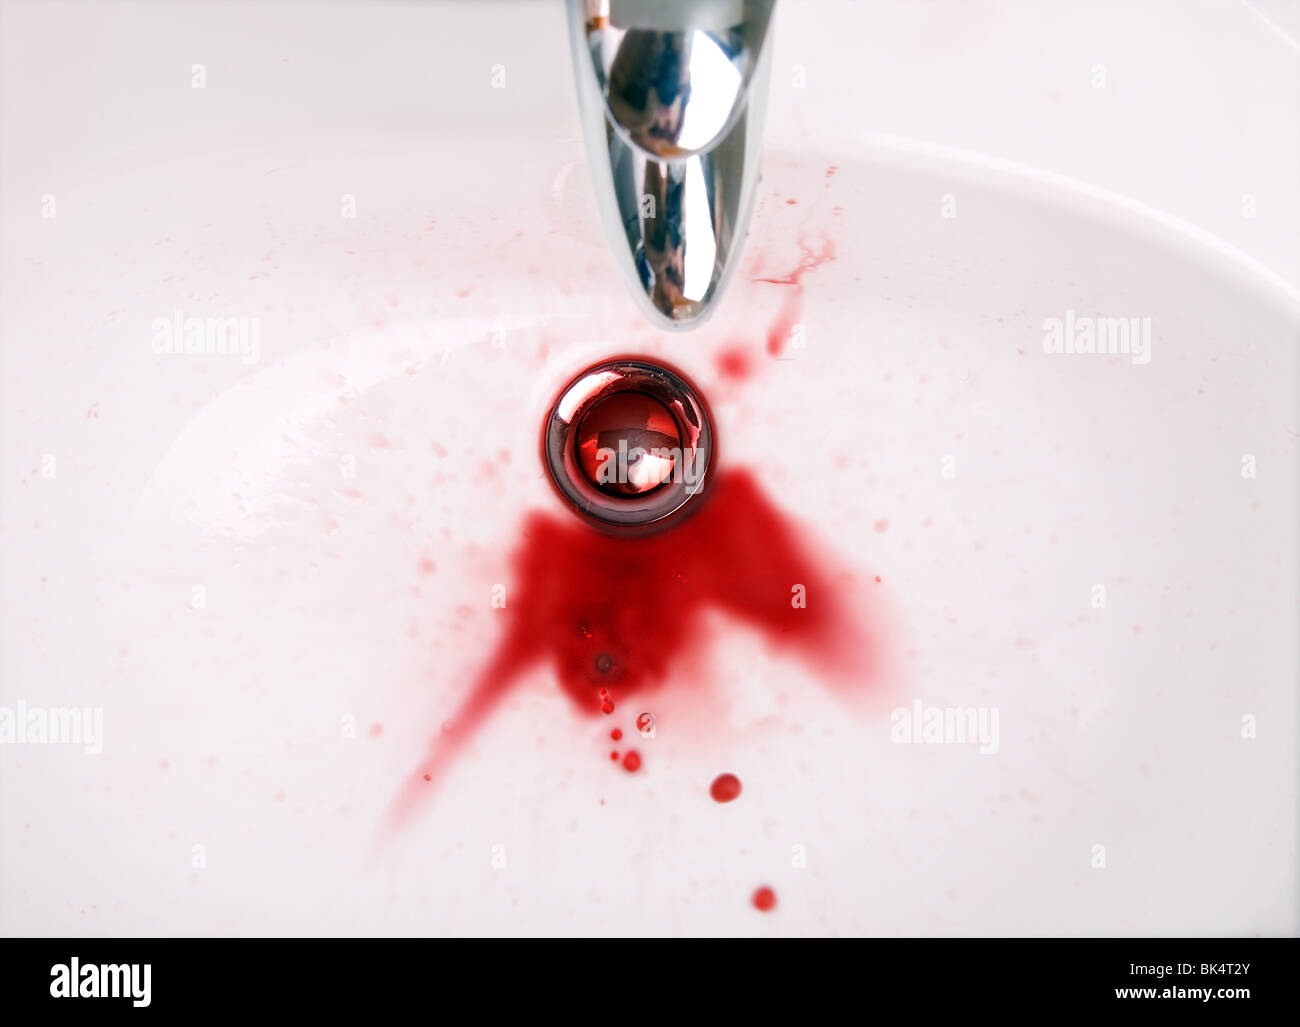 blood drop down washbasin Stock Photo